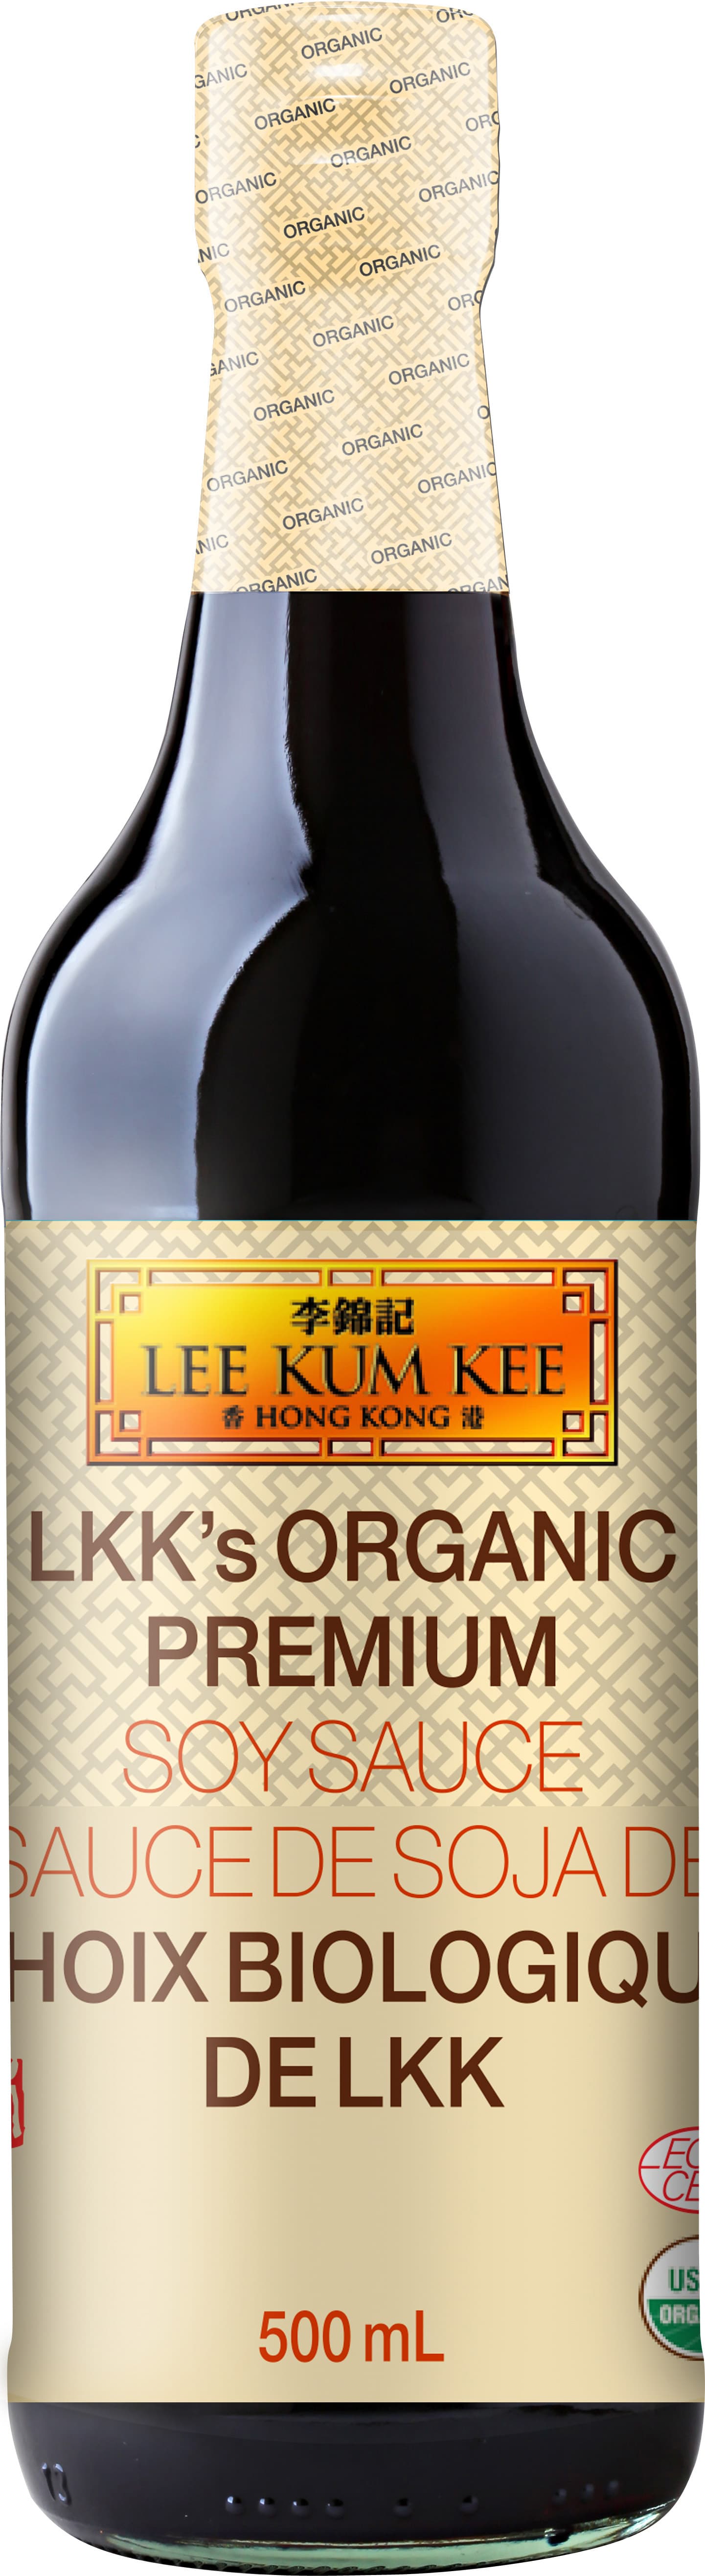 LKKs Organic Premium Soy Sauce 500ml 